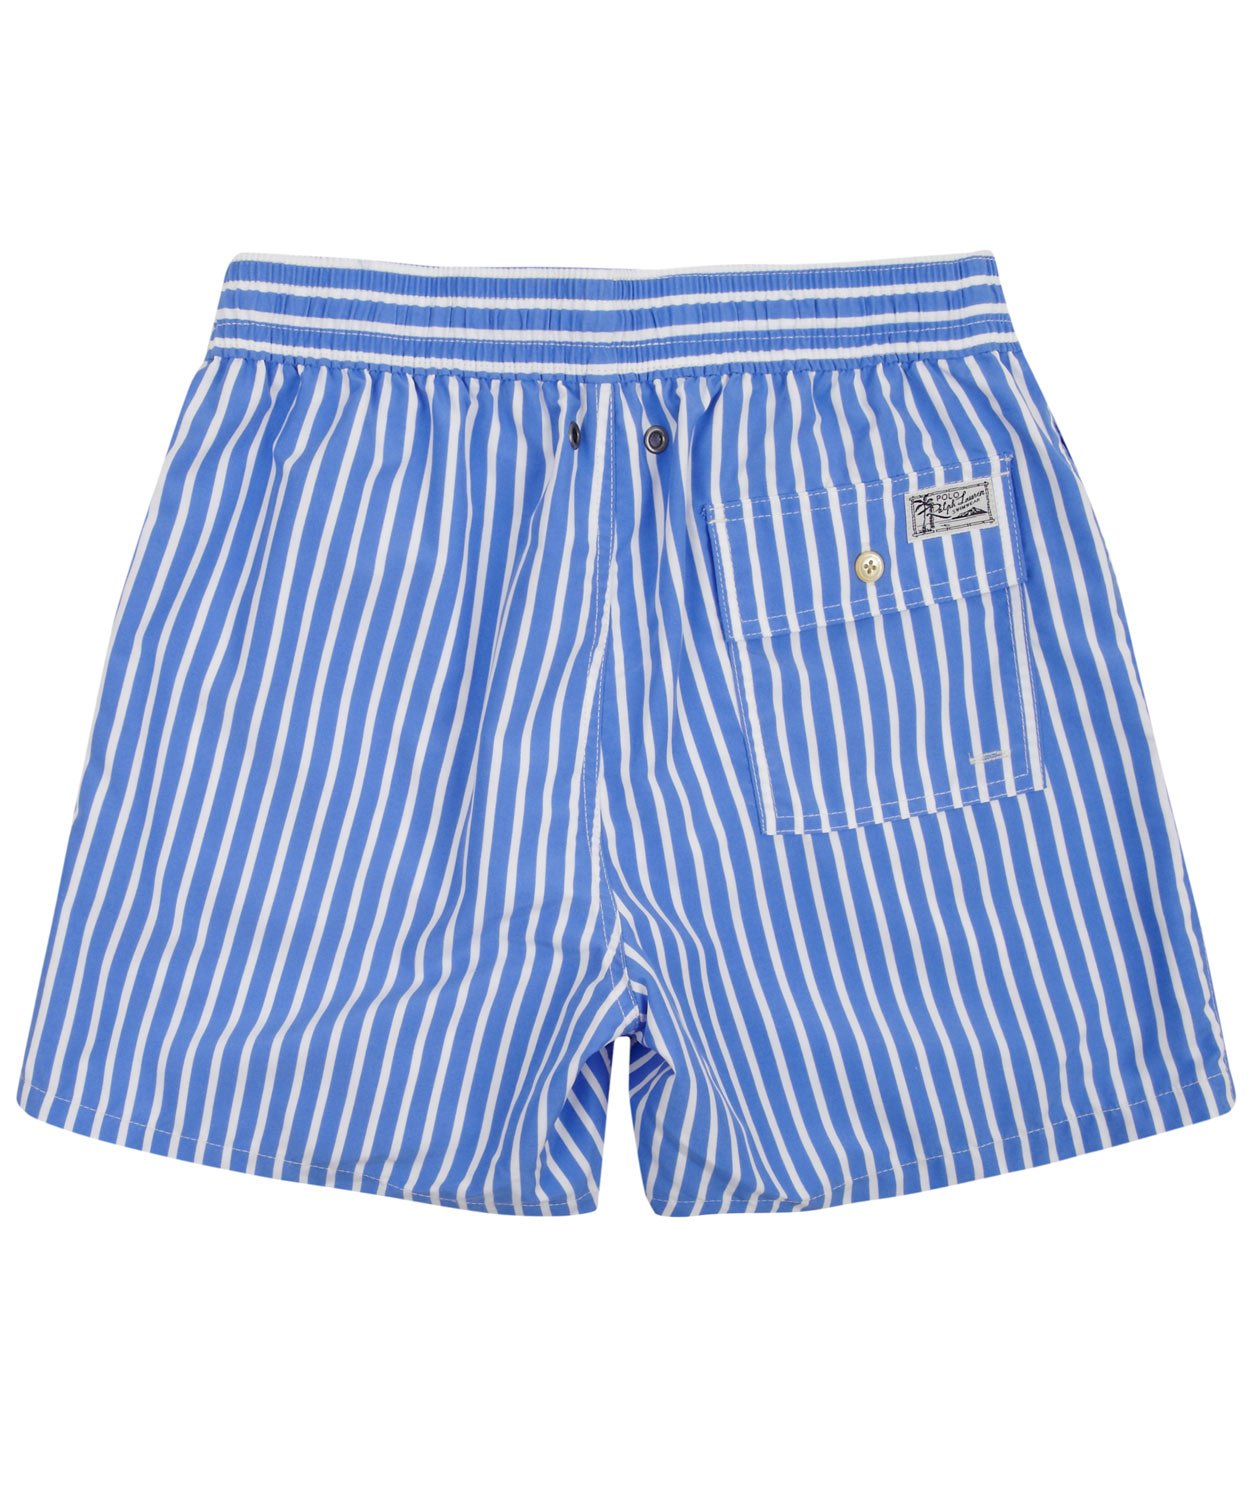 Lyst - Polo Ralph Lauren Blue Stripe Swim Shorts in Blue for Men